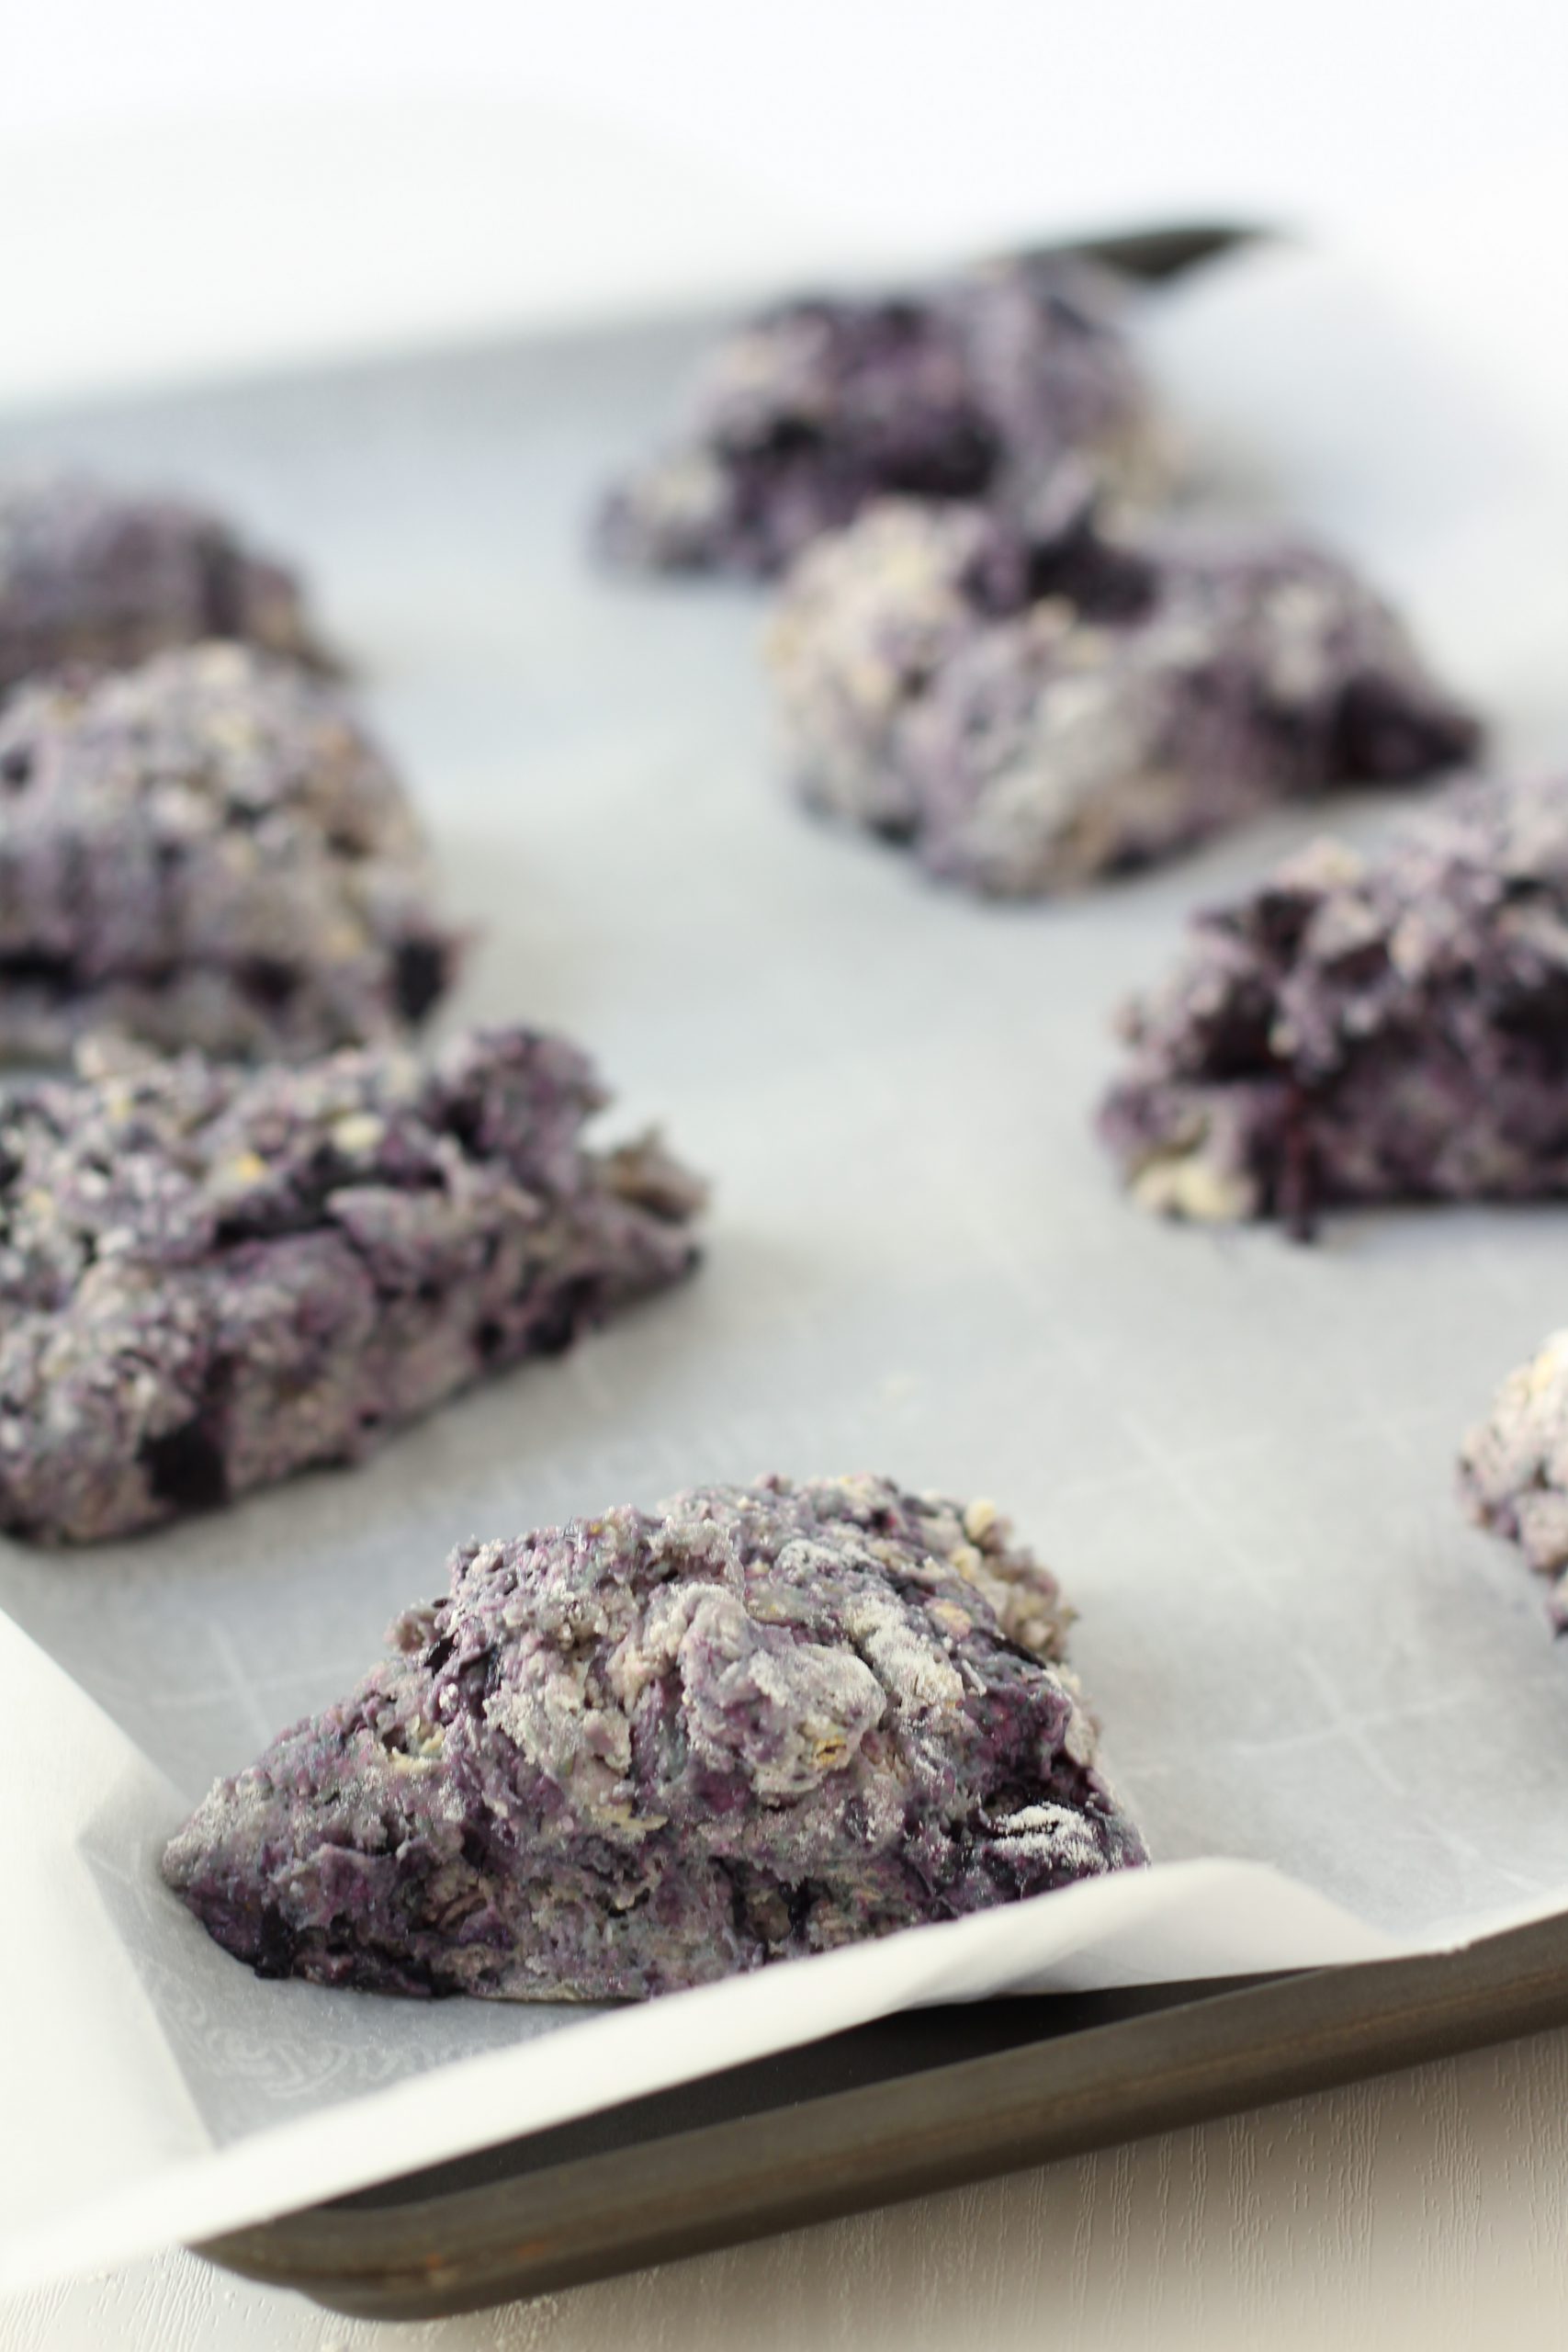 Blueberry scones on baking tray ready to bake